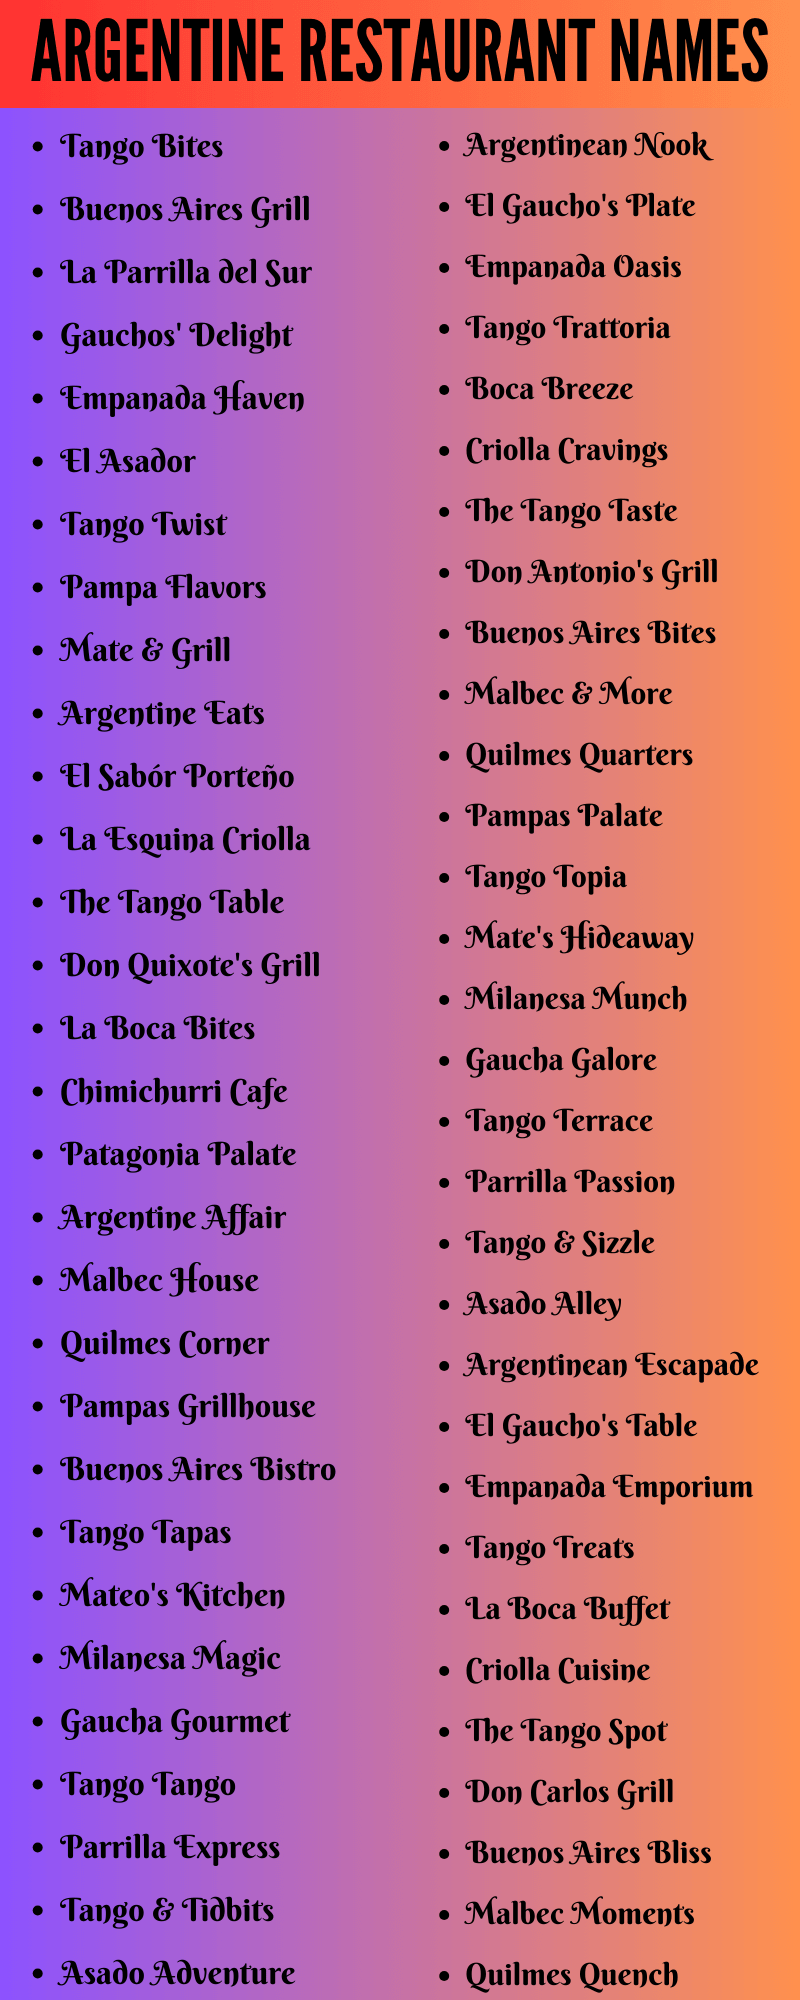 Argentine Restaurant Names